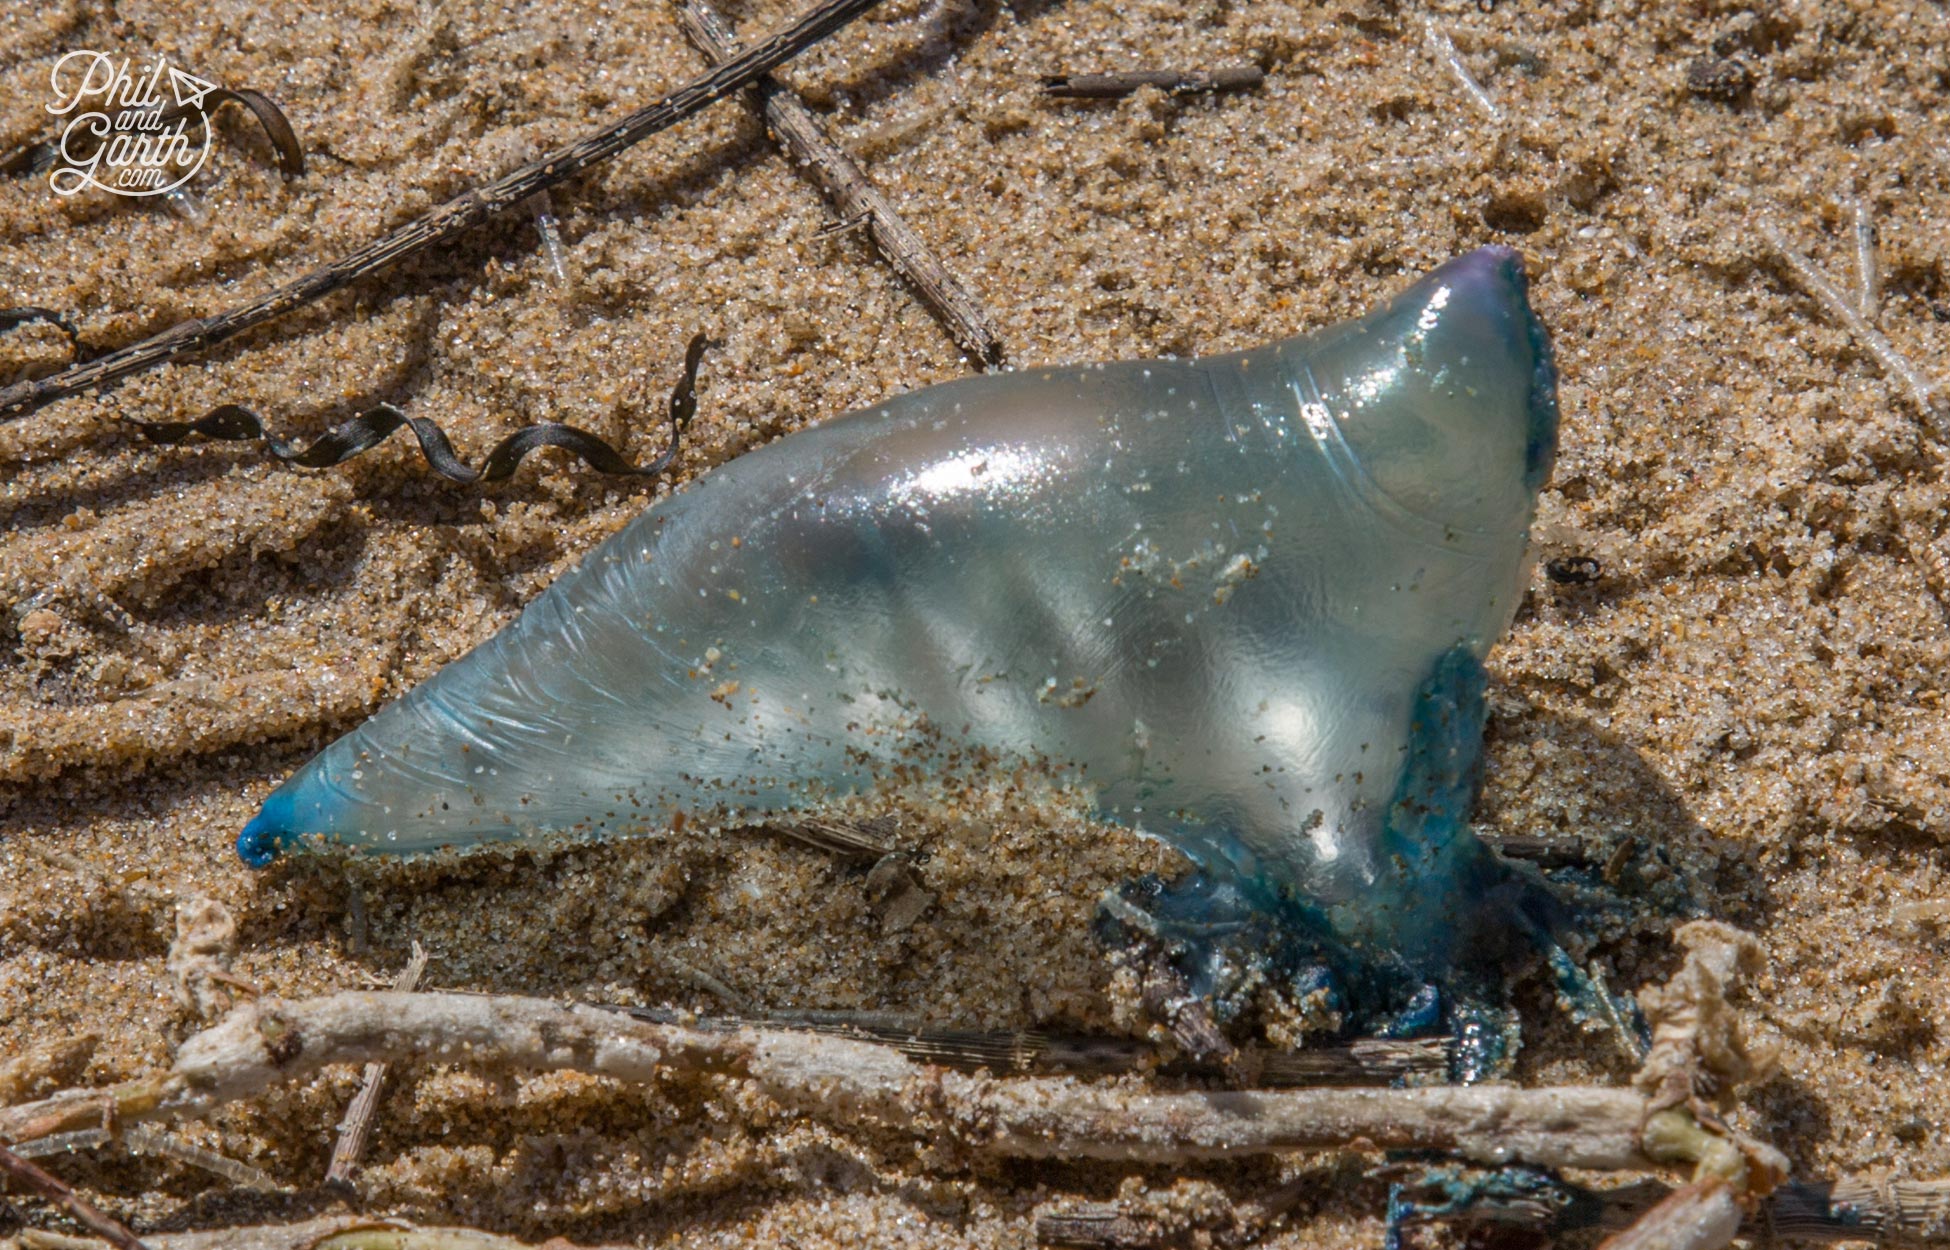 Blue Bottle jellyfish that look like plastic bags